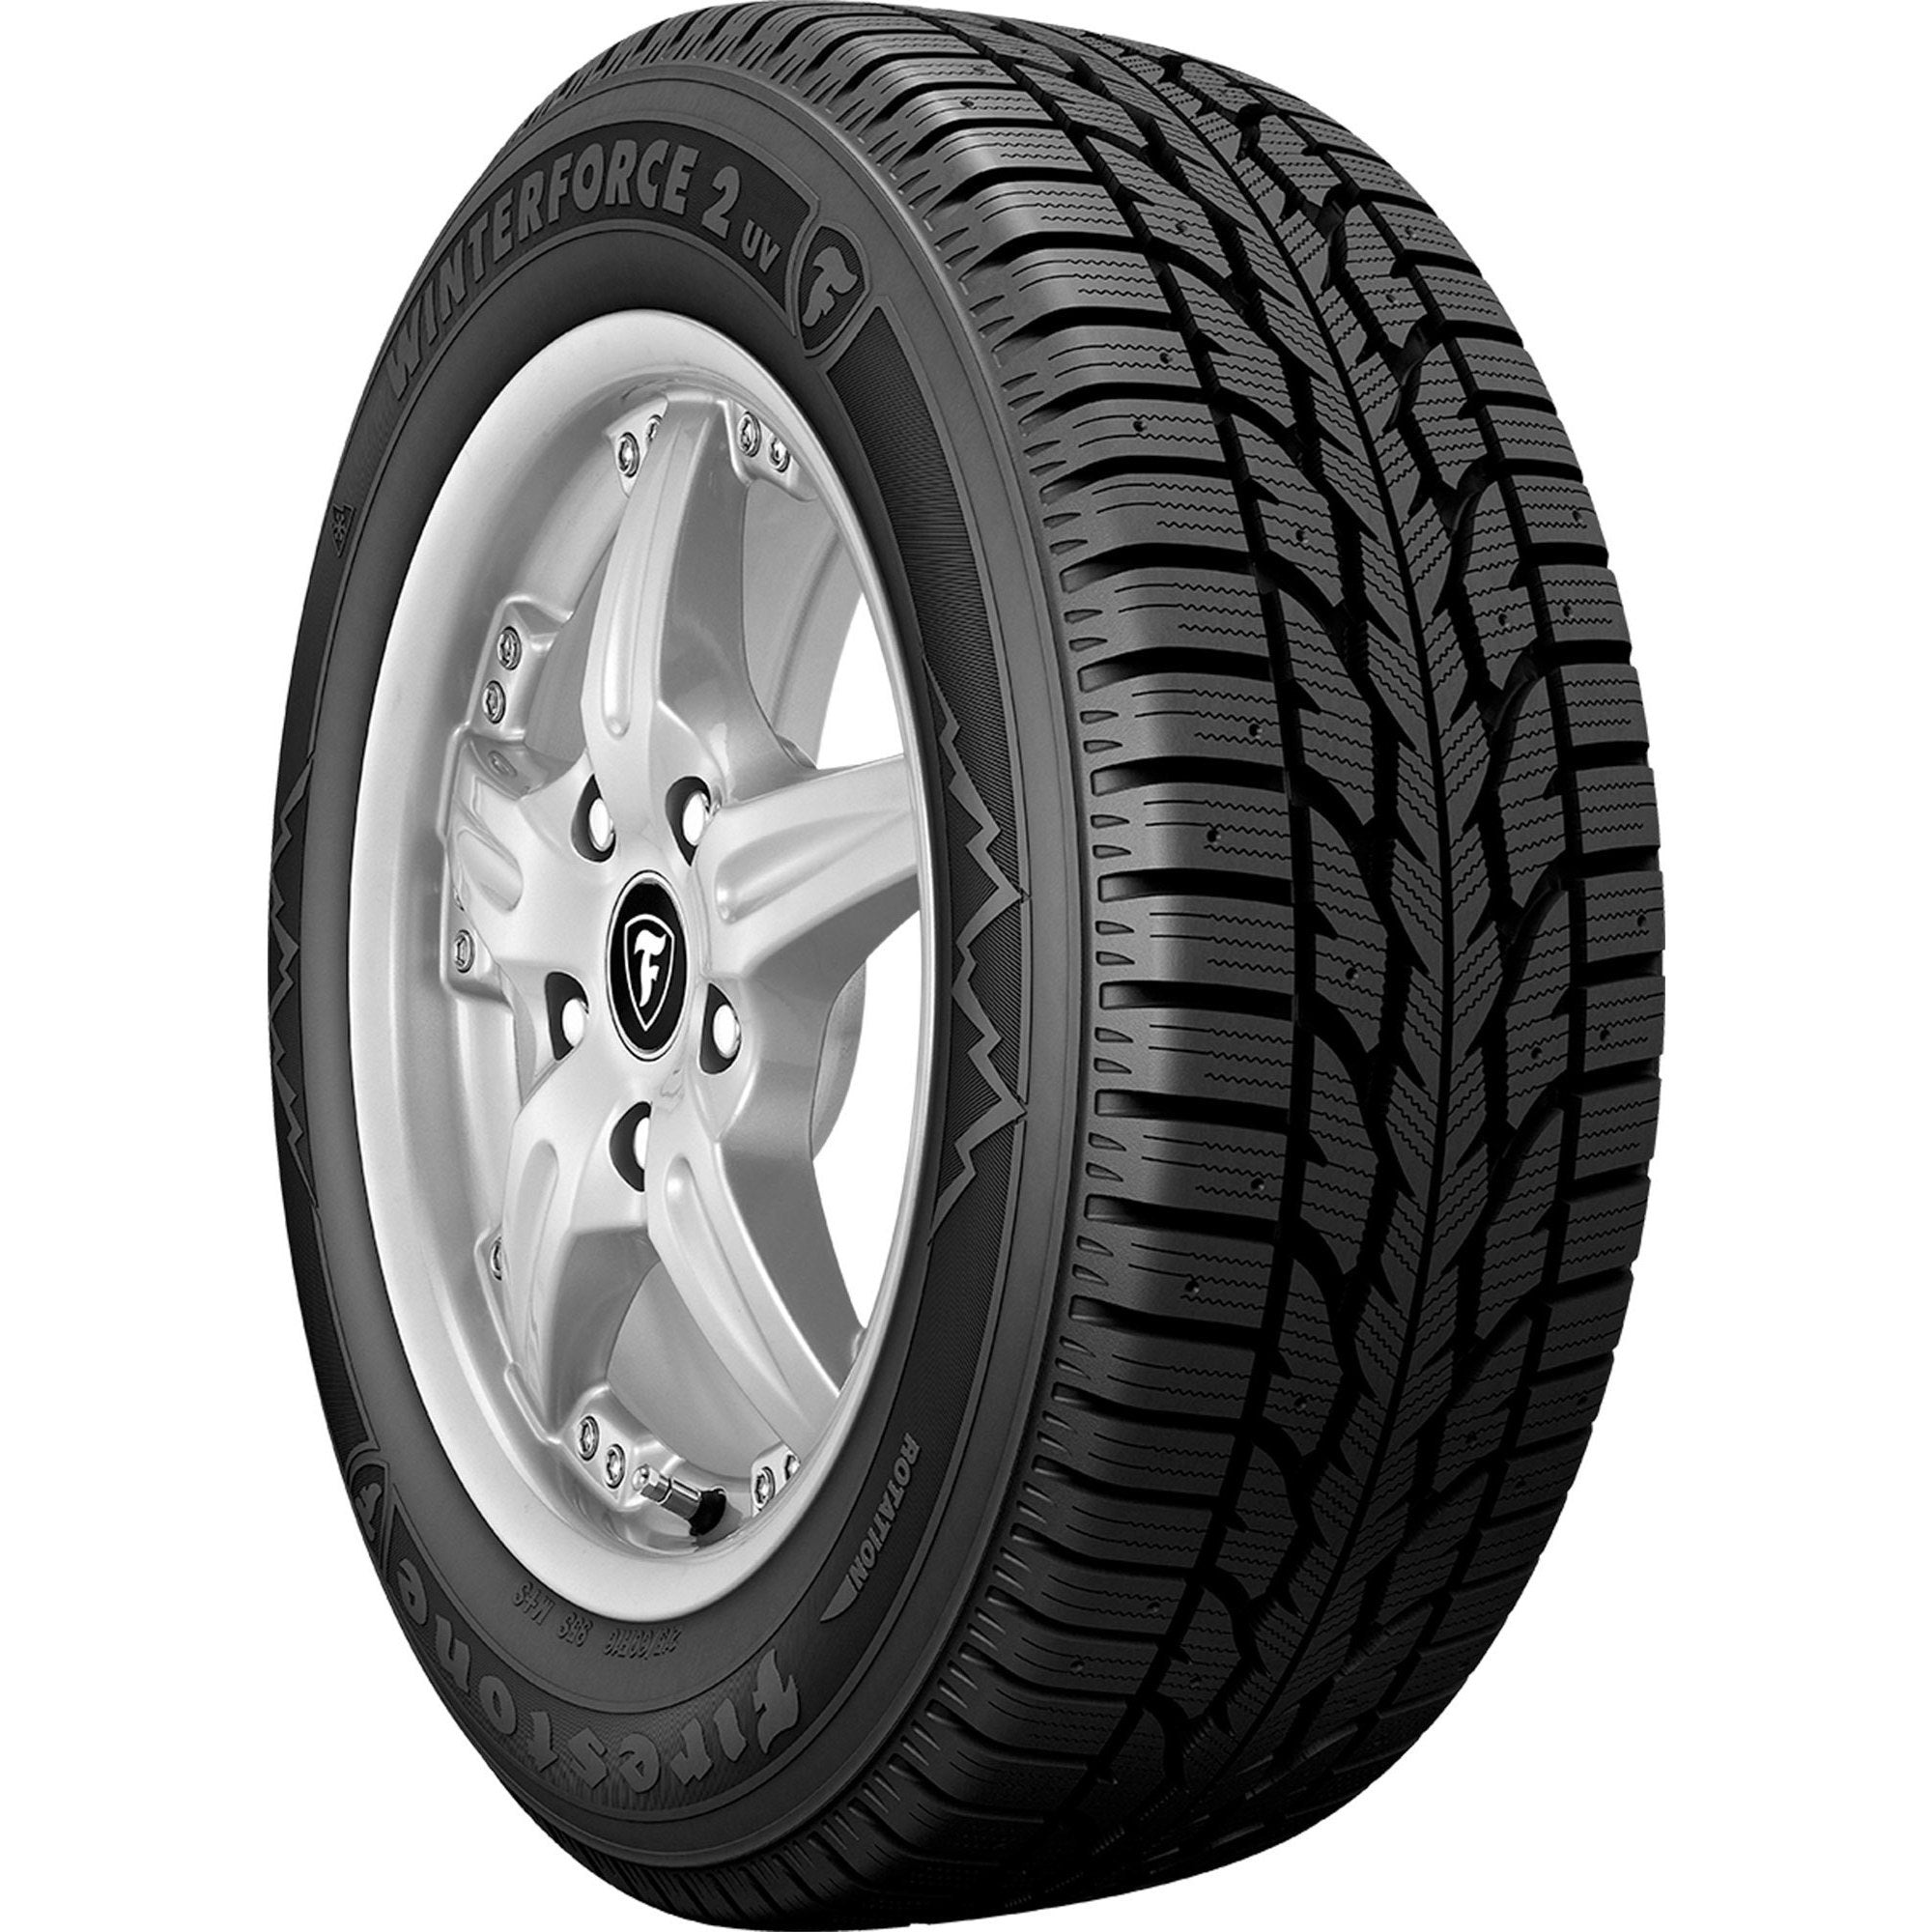 FIRESTONE WINTERFORCE2 UV P275/65R18 (32.1X10.8R 18) Tires